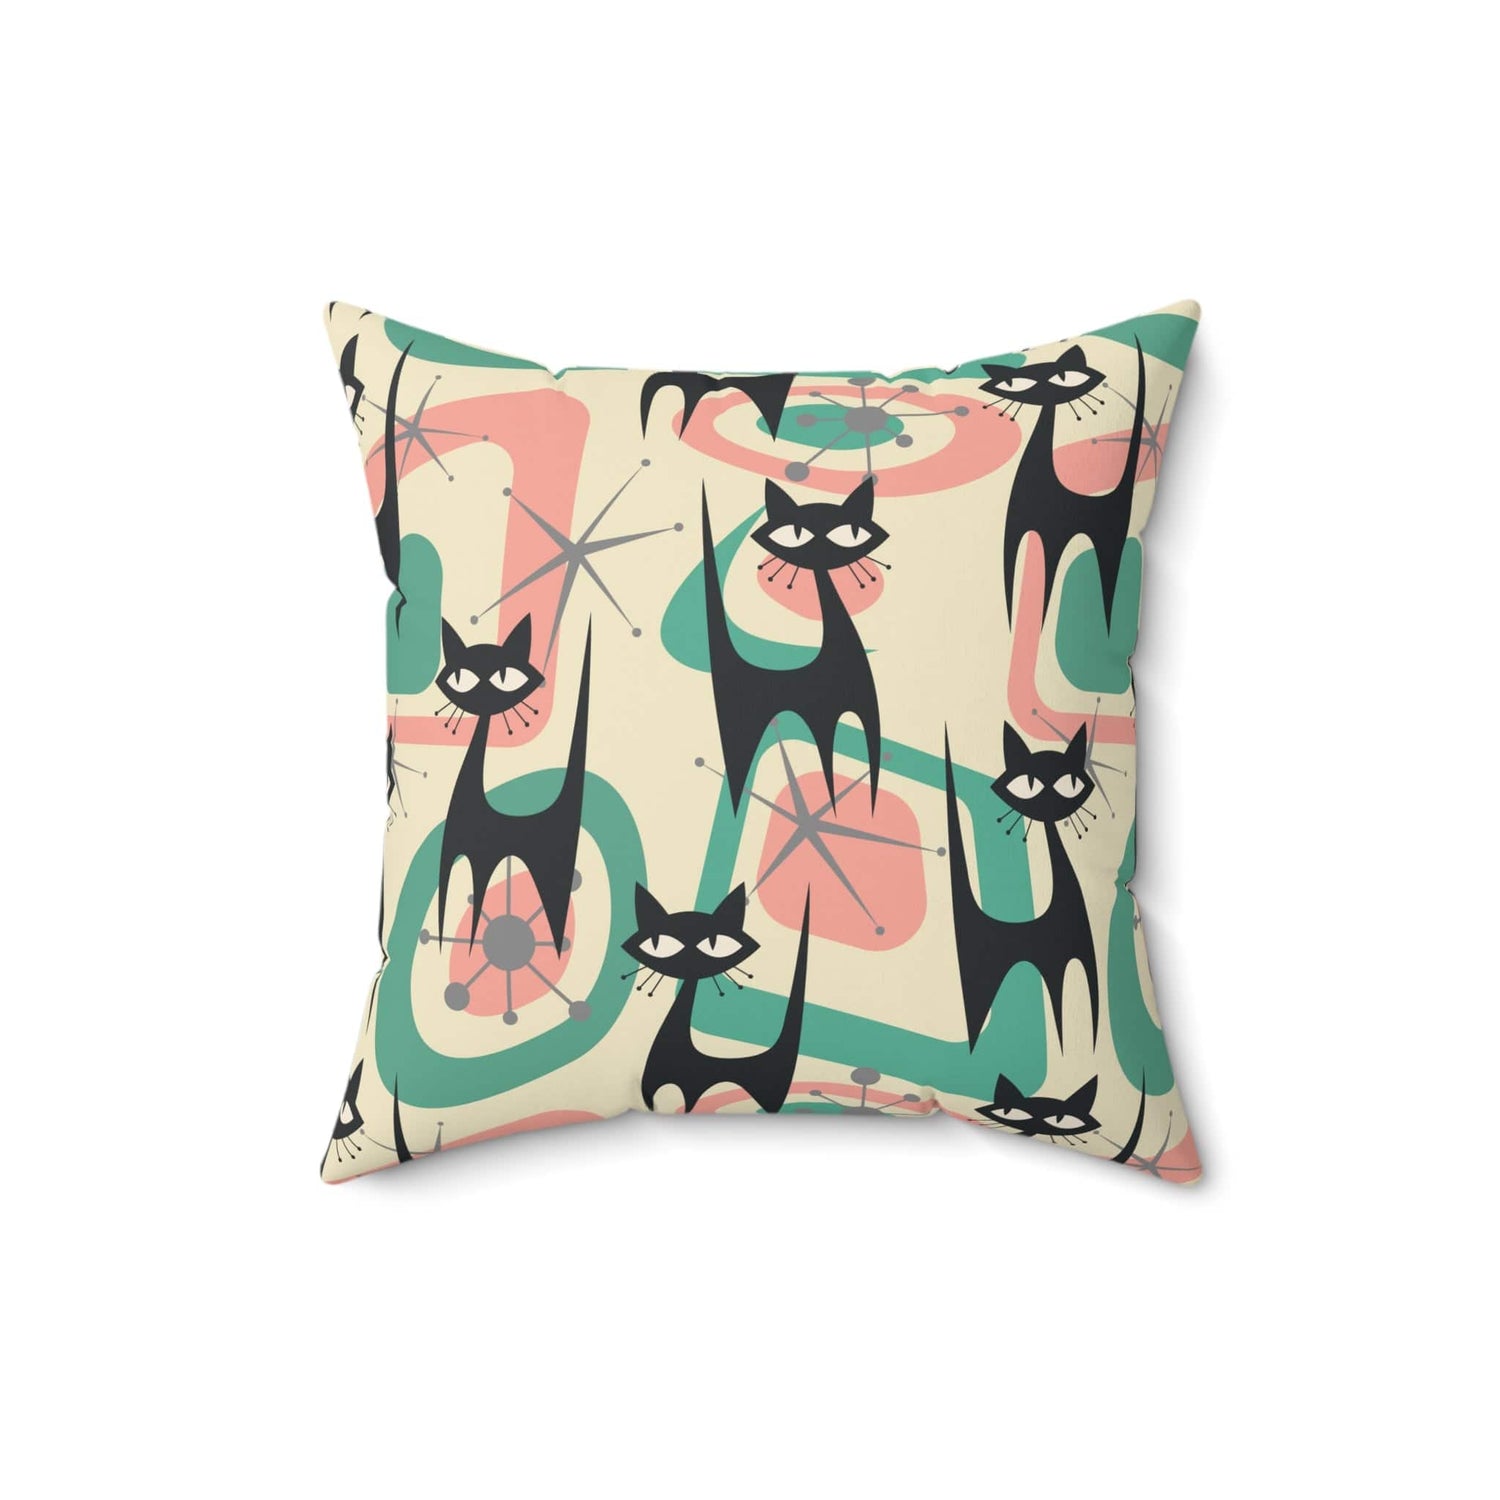 Kate McEnroe New York Atomic Cat Mid Century Modern Starburst Throw Pillow with Insert, 60s Retro Geometric Pink, Mint, Gray Living Room, Bedroom Decor Throw Pillows